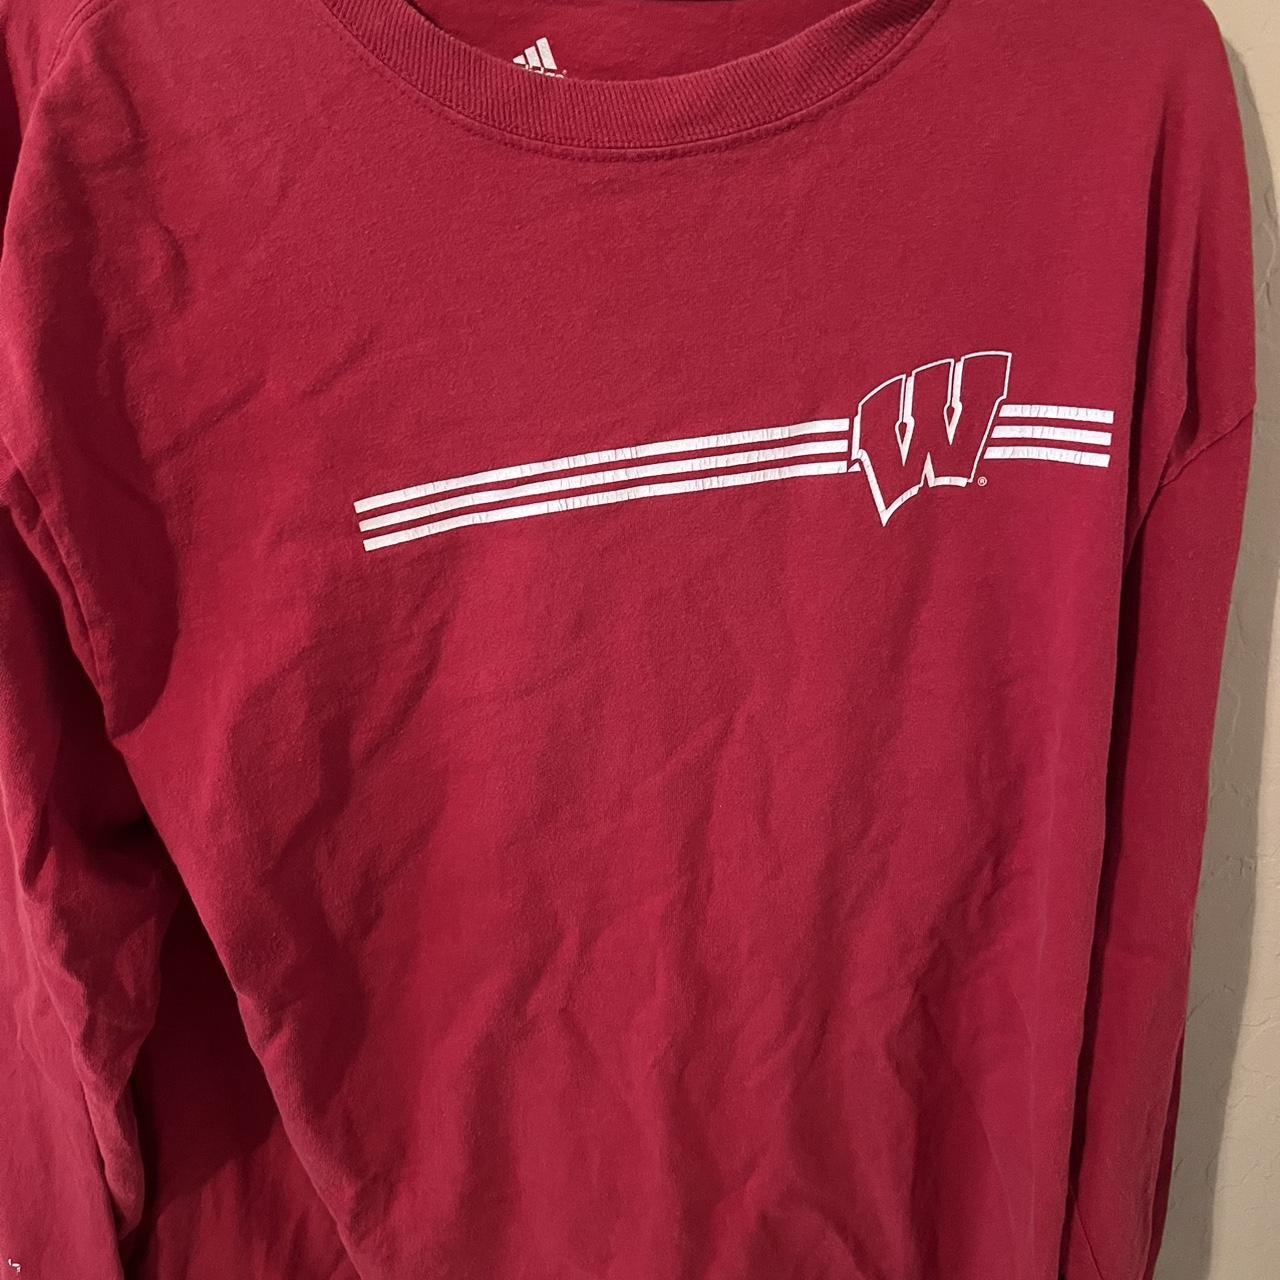 Adidas Men's Sweatshirt - Red - L